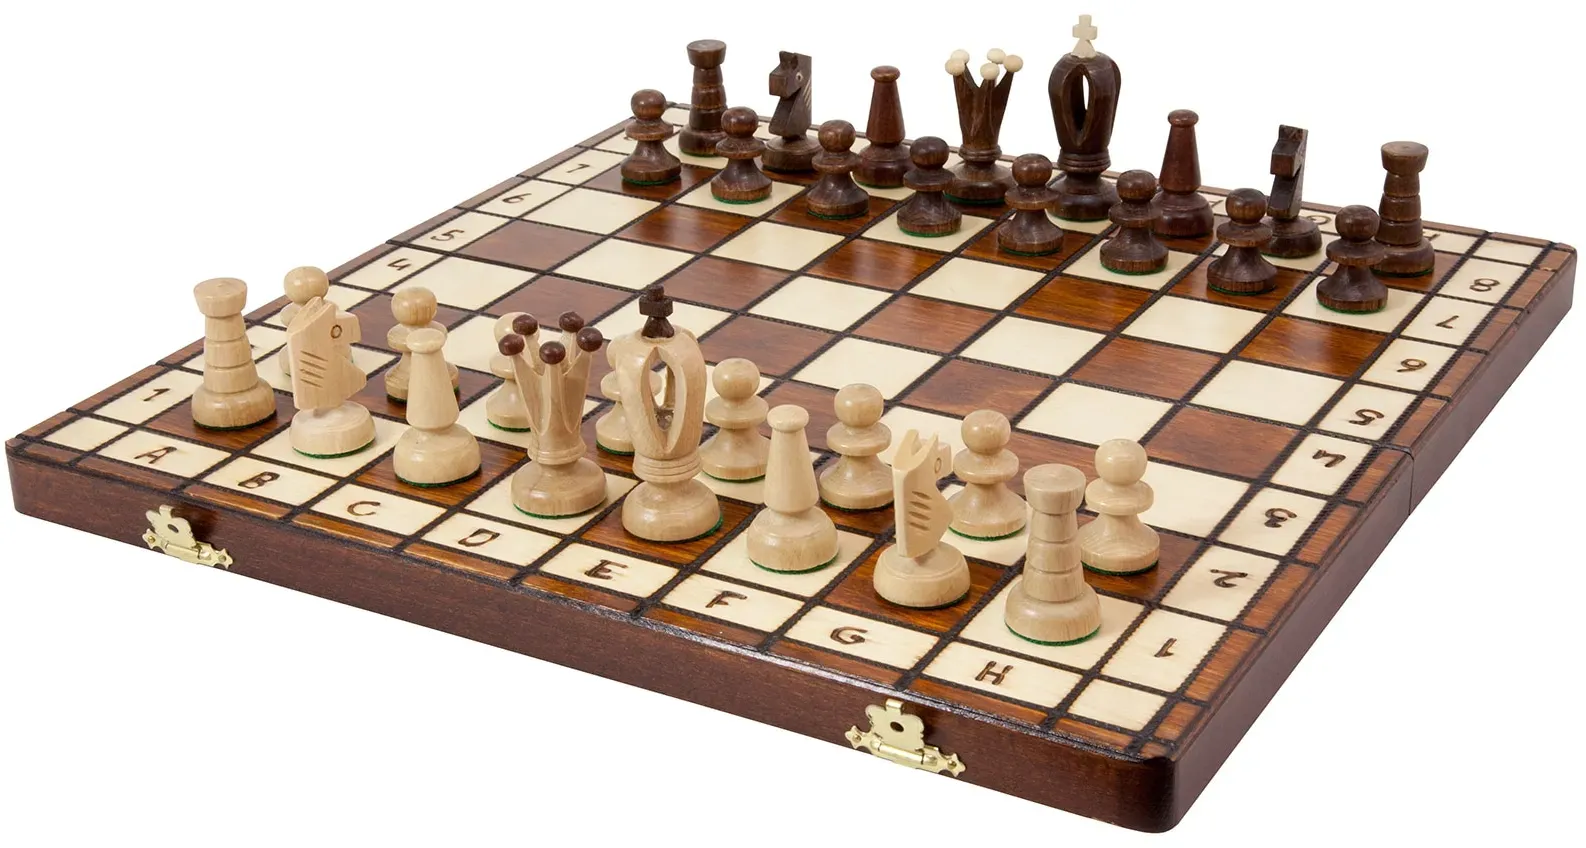 Albatros Schachspiel Holz ROYAL, Handgefertigt und Kompakt 36 x 36cm, Königshöhe 65mm-Edles Schach-Brett Holz Hochwertig inklusive Holz Schachfiguren - Gefertigt in EU - Chess Board Full Set